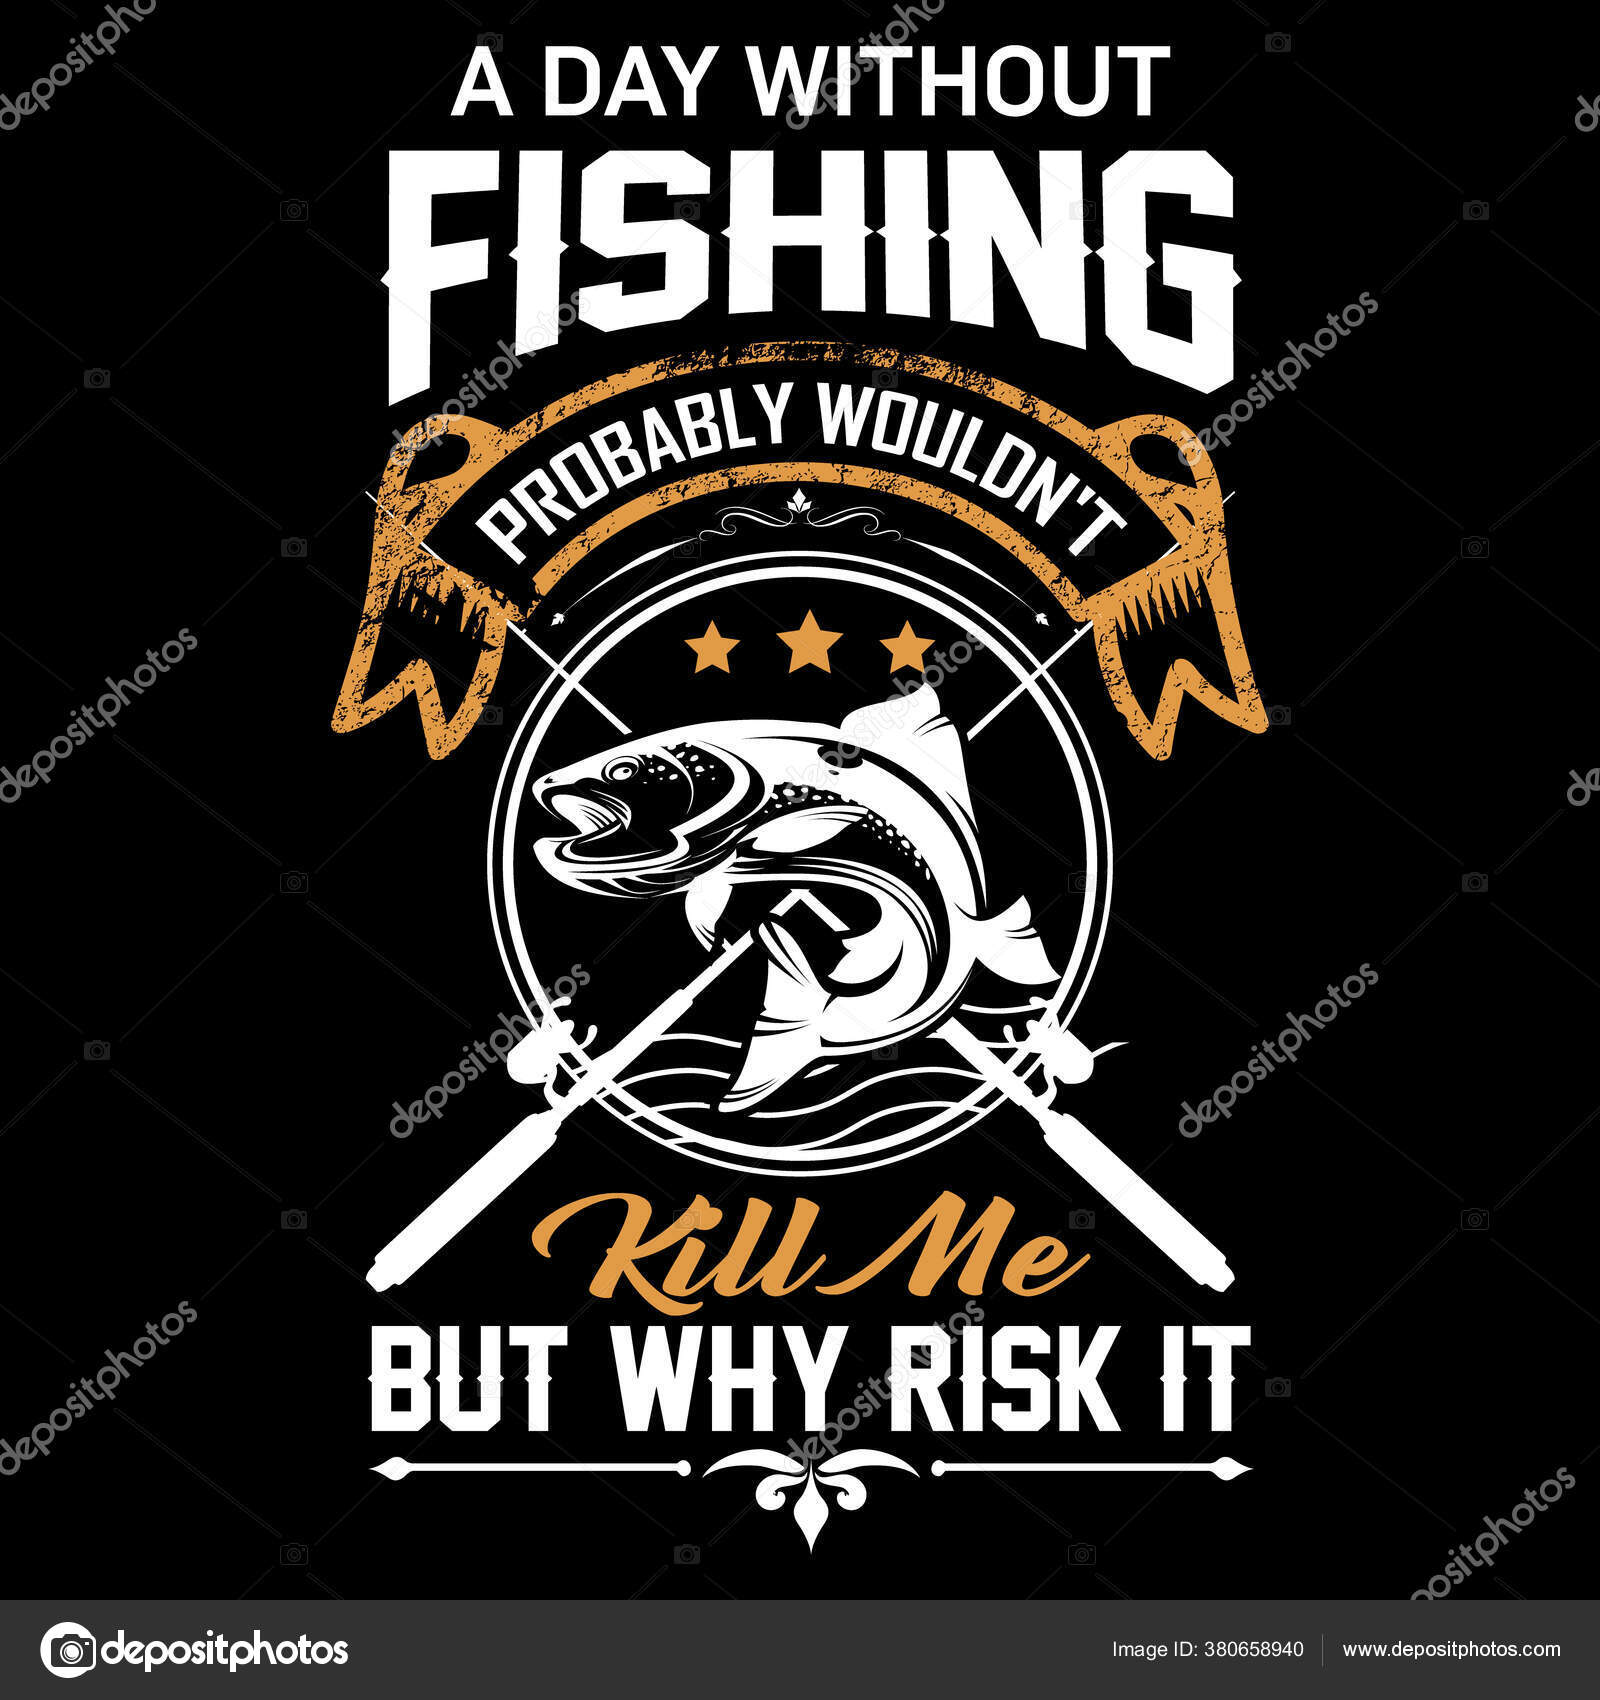 https://st4.depositphotos.com/36714108/38065/v/1600/depositphotos_380658940-stock-illustration-fishing-shirts-design-vector-graphic.jpg